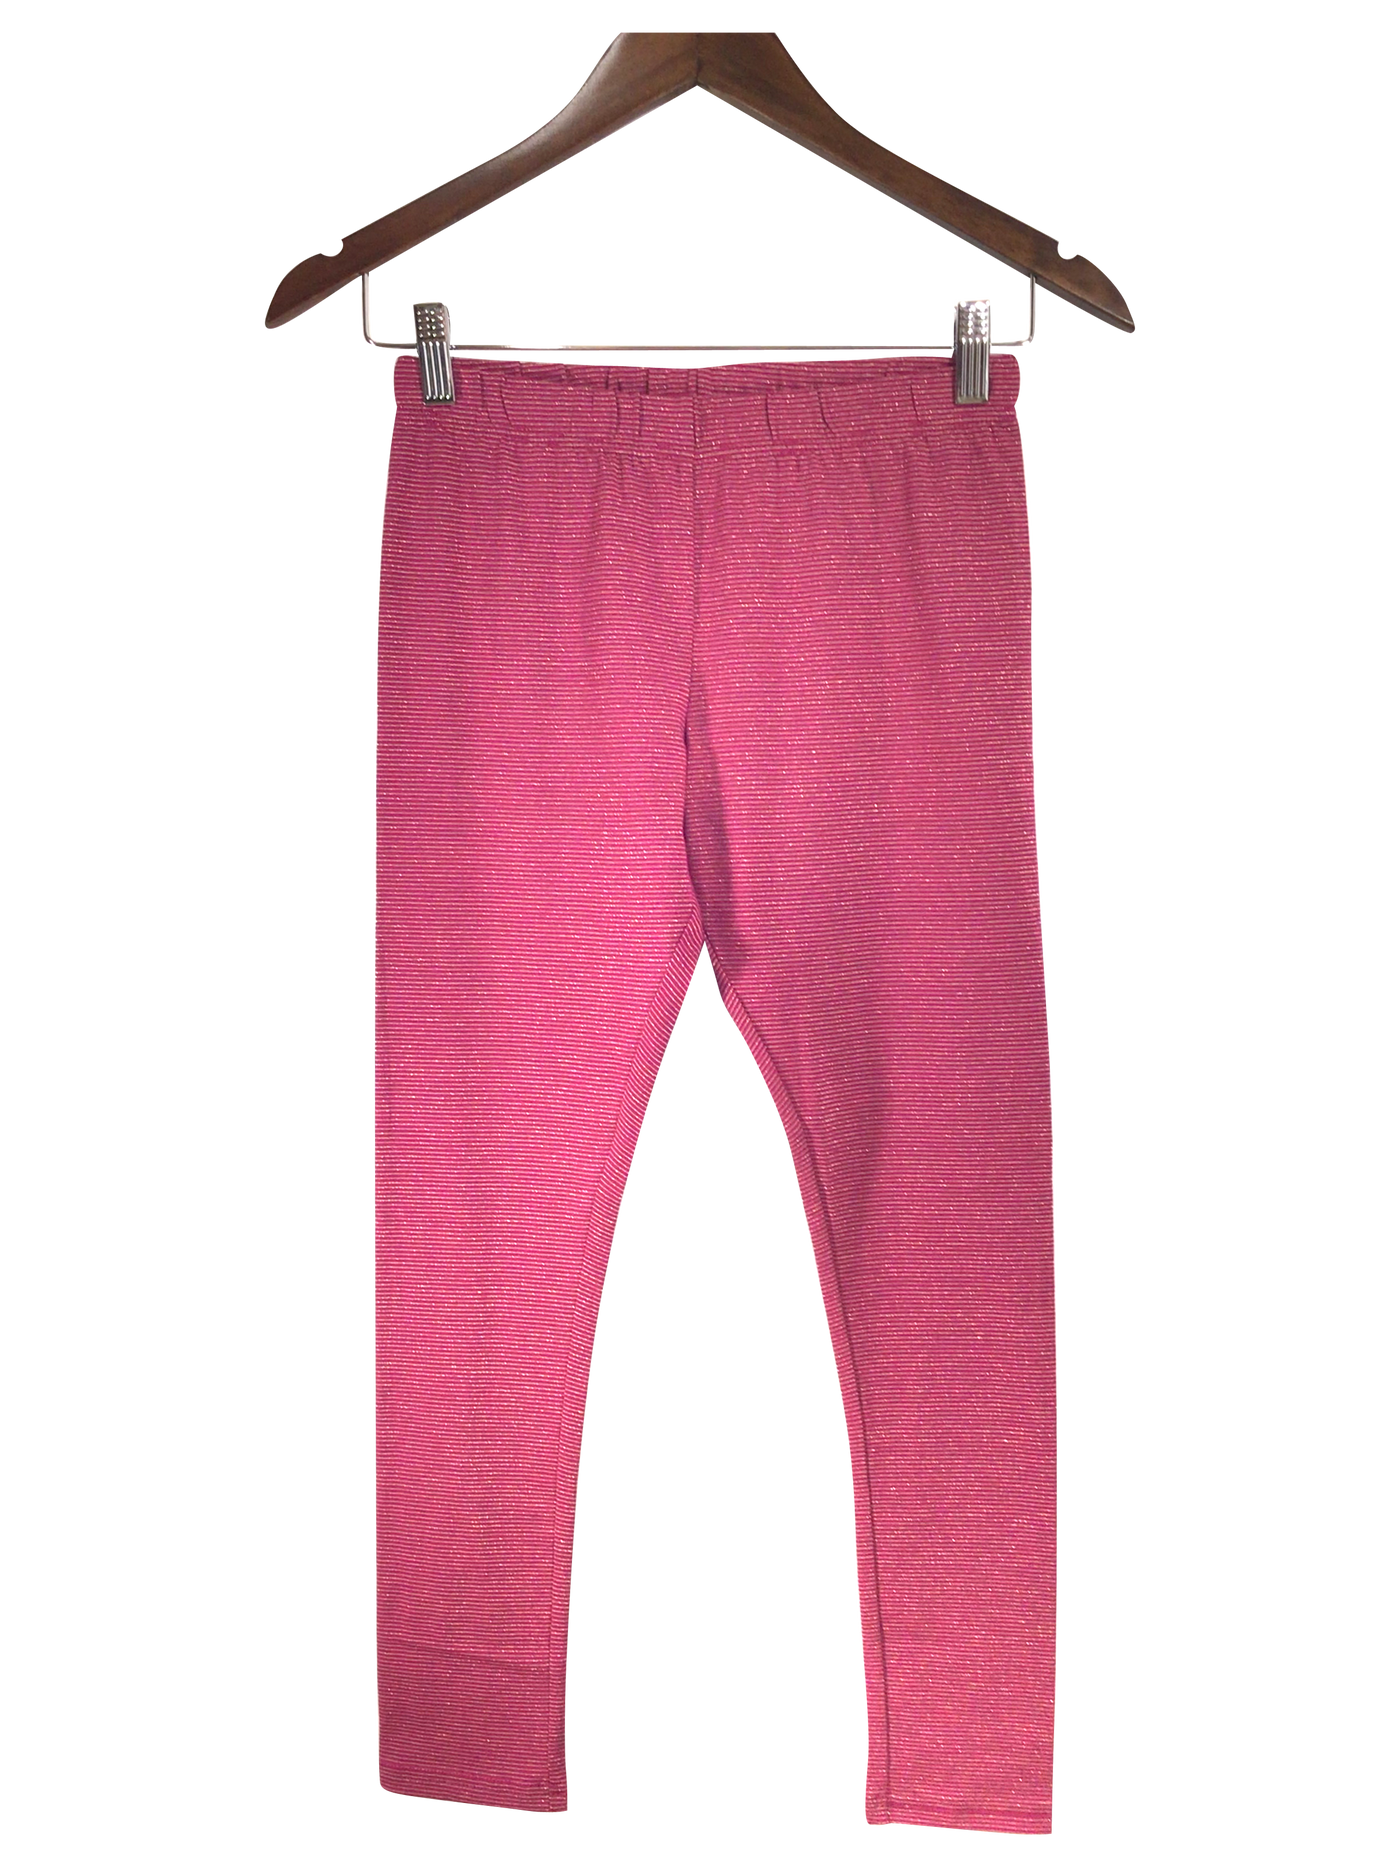 CARTER'S Pant Regular fit in Pink - Size 14 | 6.99 $ KOOP